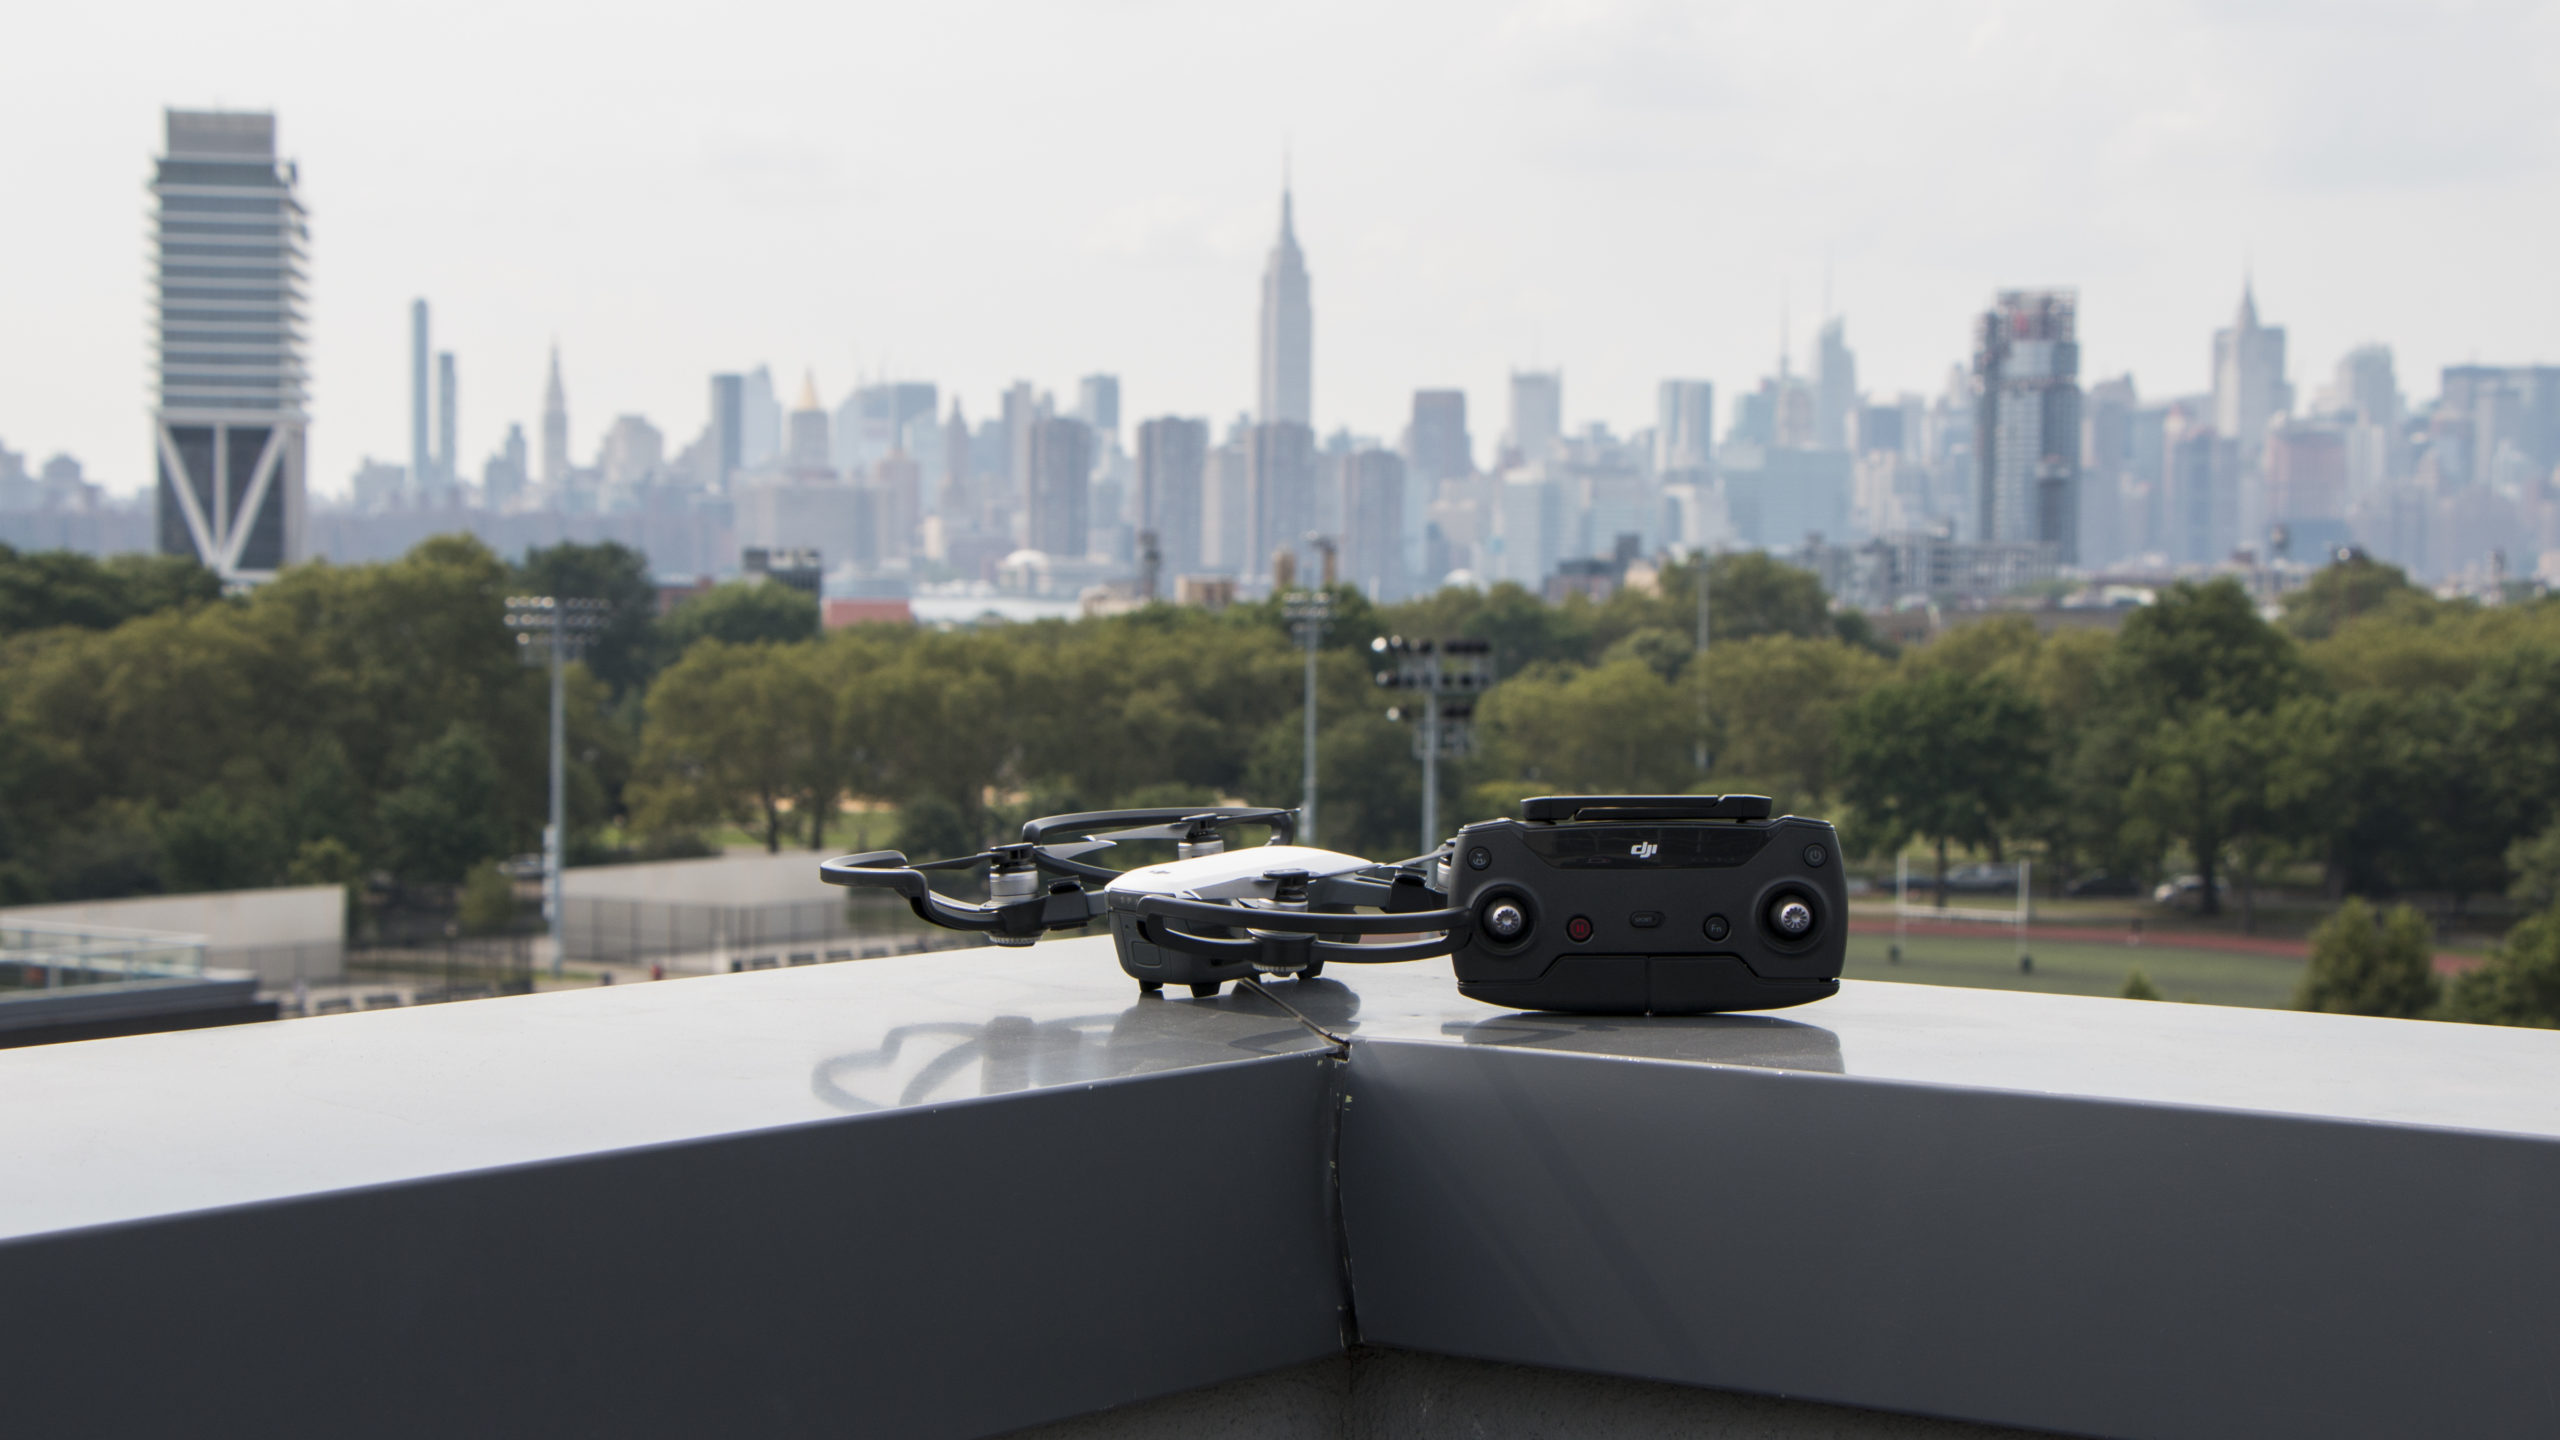 DJI Spark Drone: The Gizmodo Review